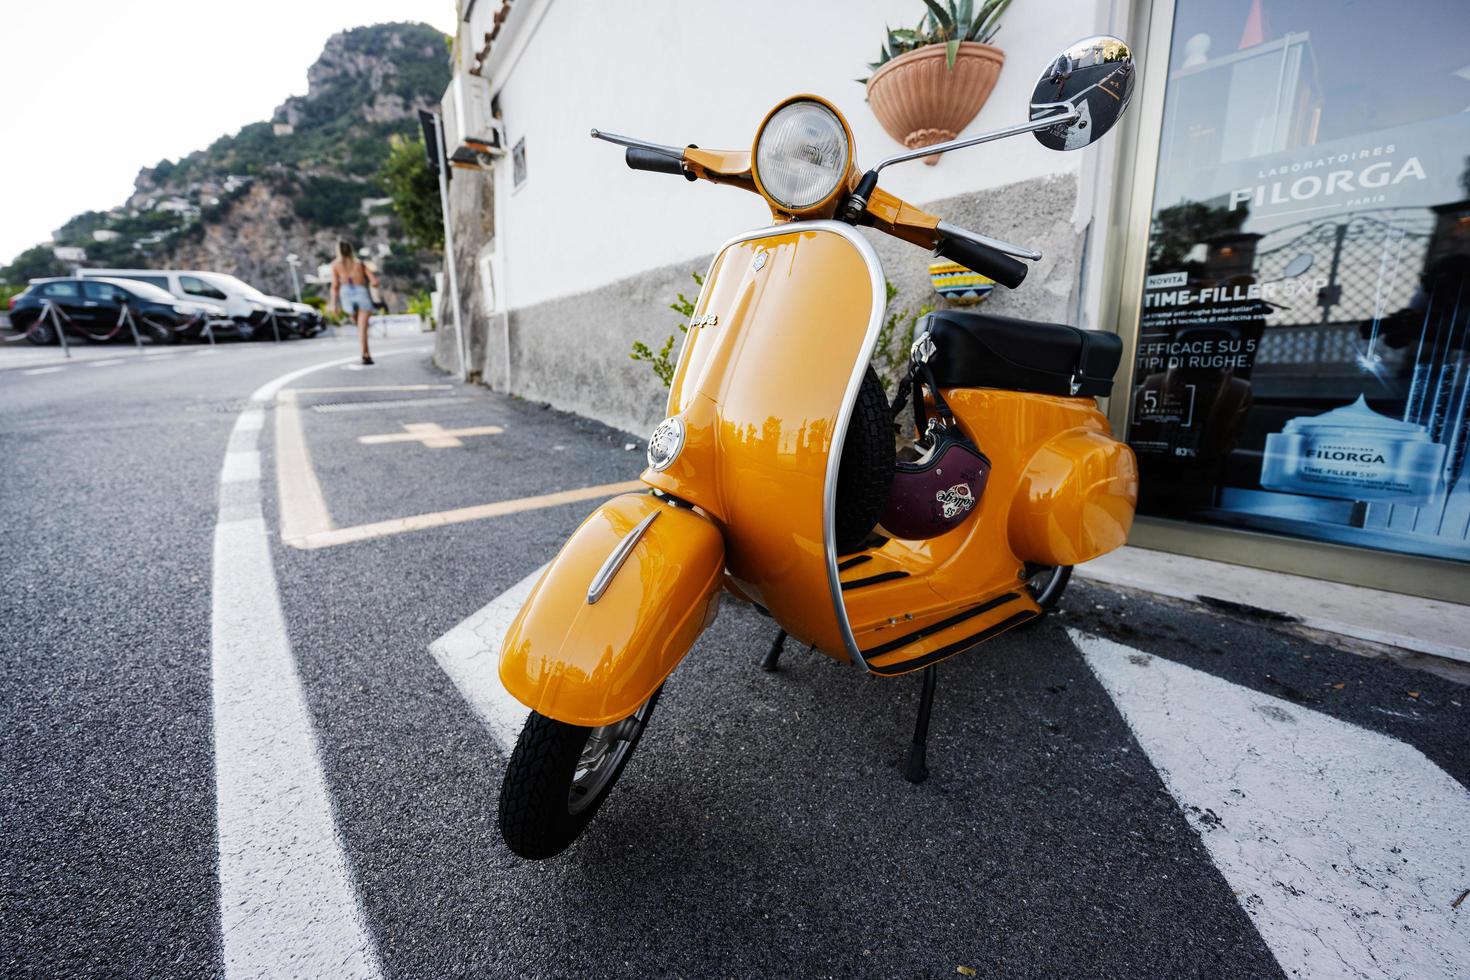 1964 vintage yellow Vespa scooter on road of Positano, Italy. photo